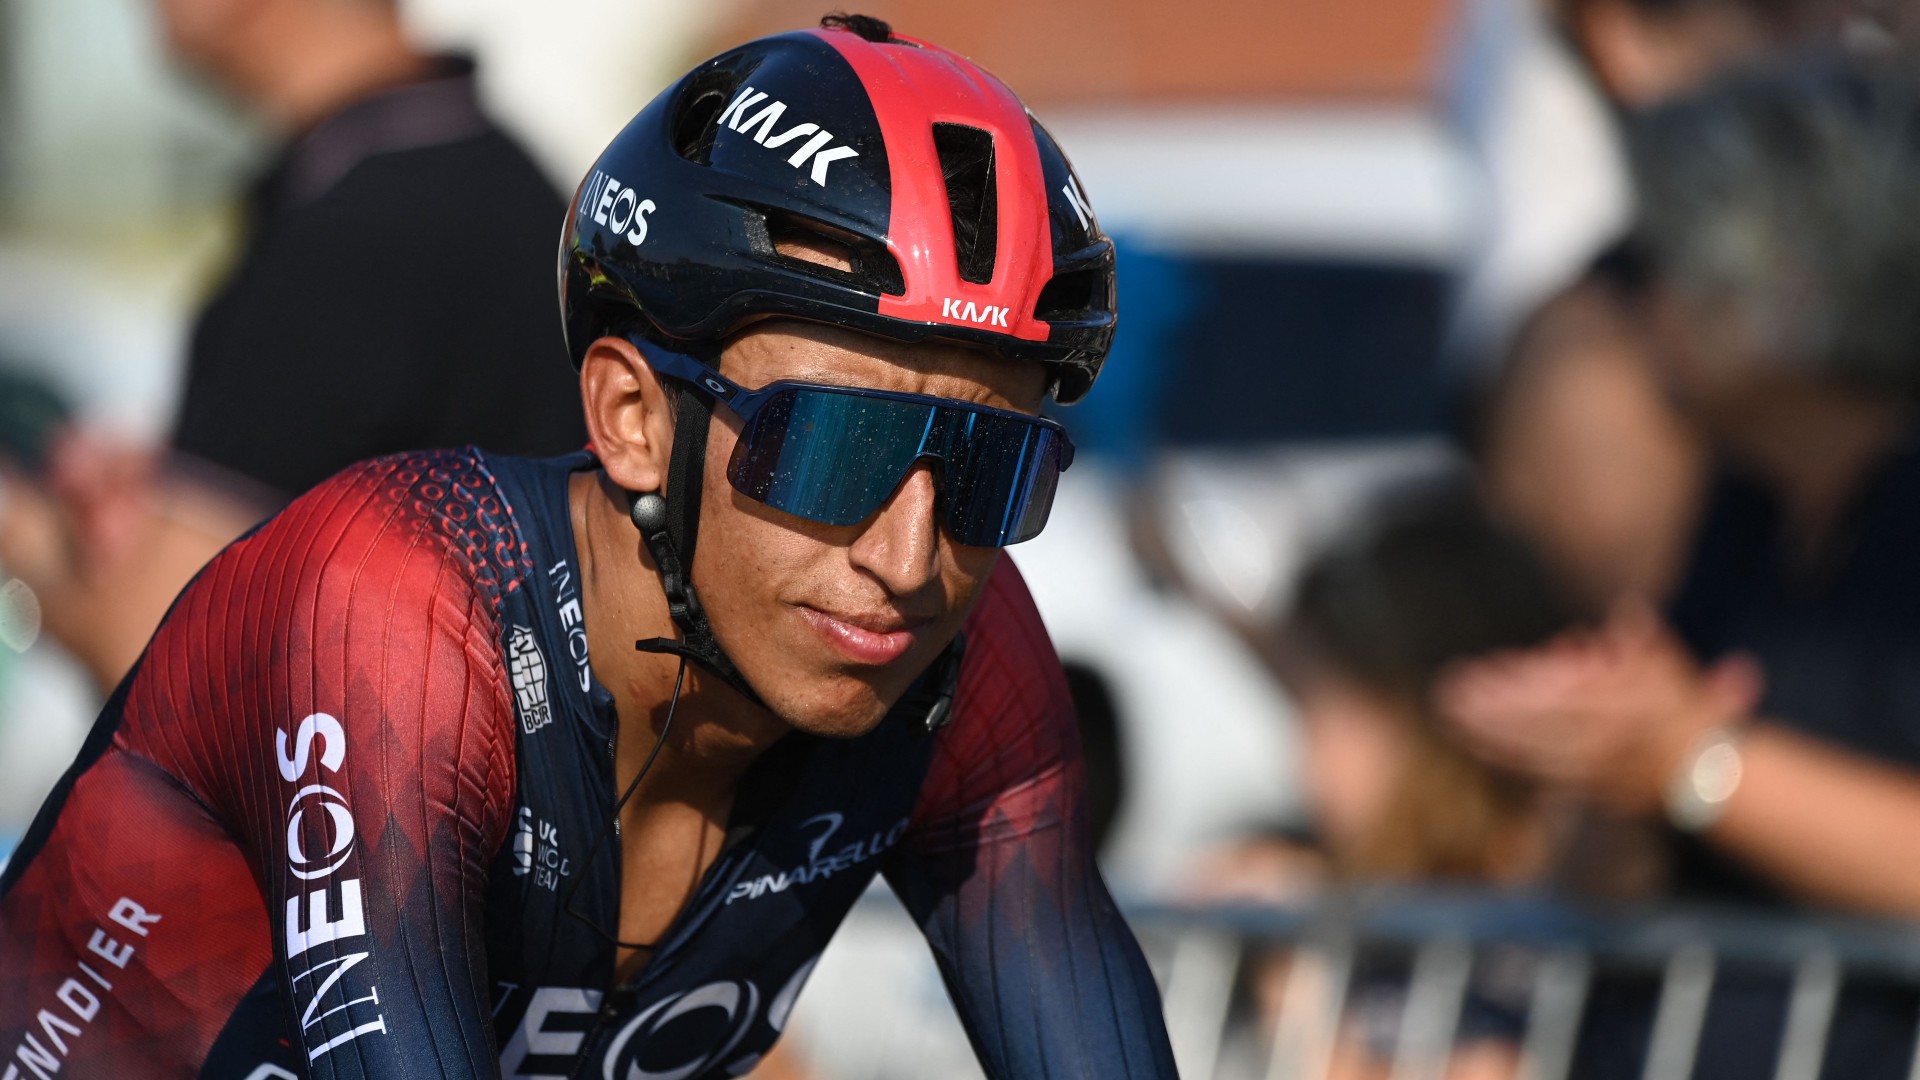 Egan Bernal: “Tengo fe en poder volver al Tour de Francia”